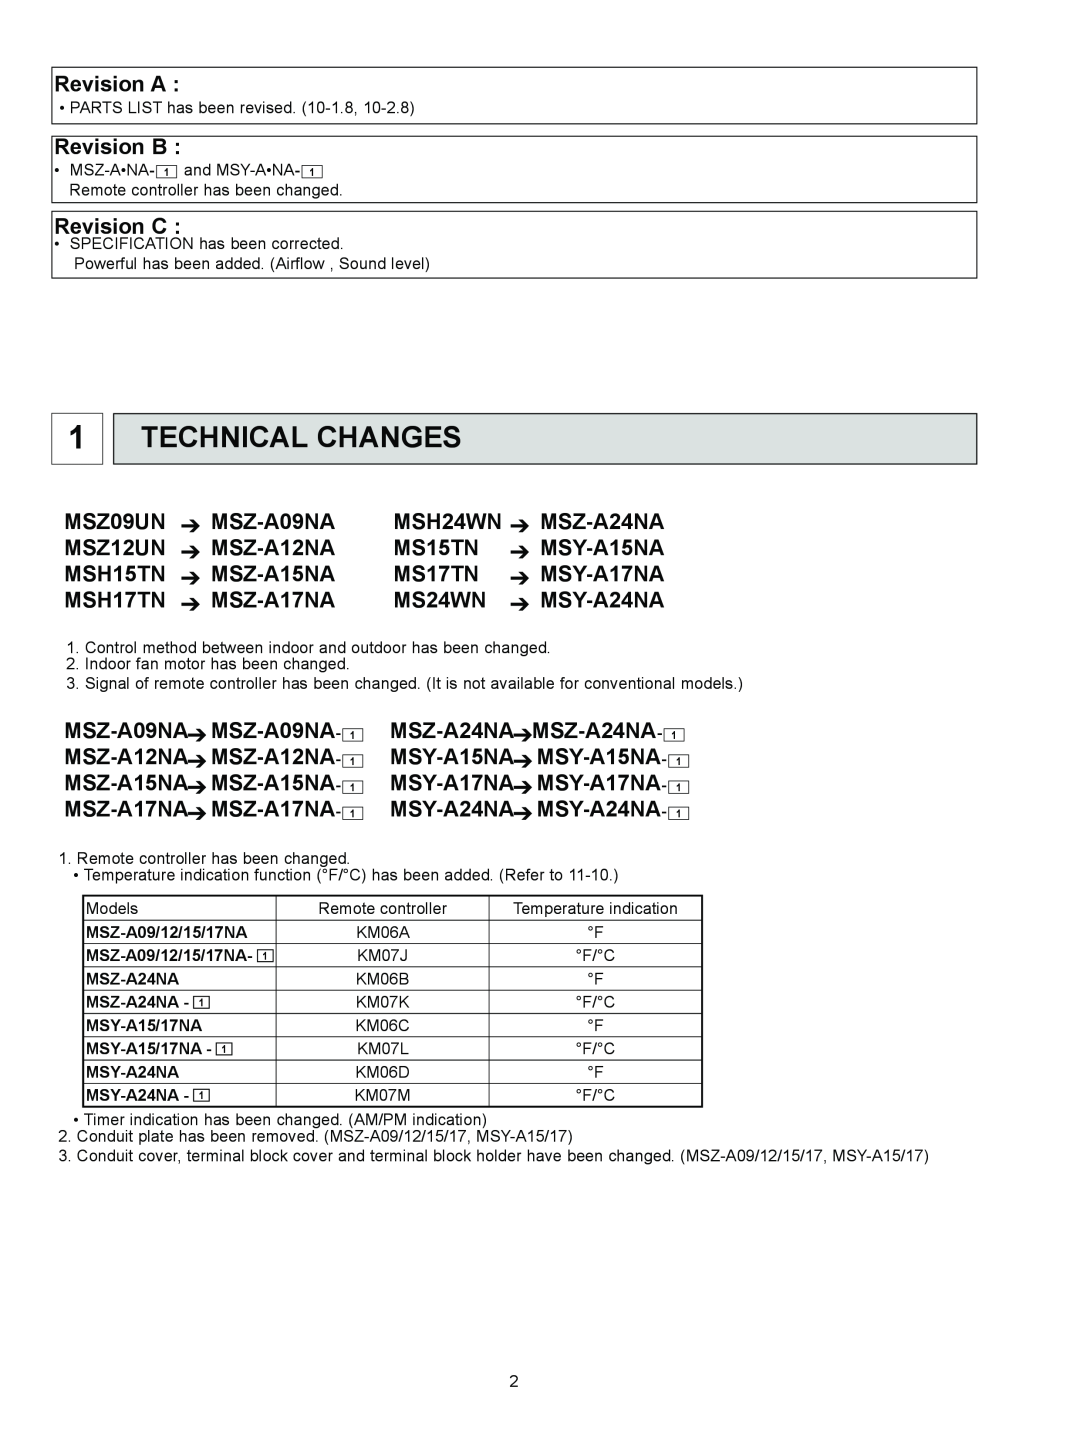 Logitech OB450 REVISED EDITION-B Technical Changes, Revision A, Revision B, MSZ09UN, MSZ-A09NA, MSH24WN, MSZ-A24NA, MS15TN 